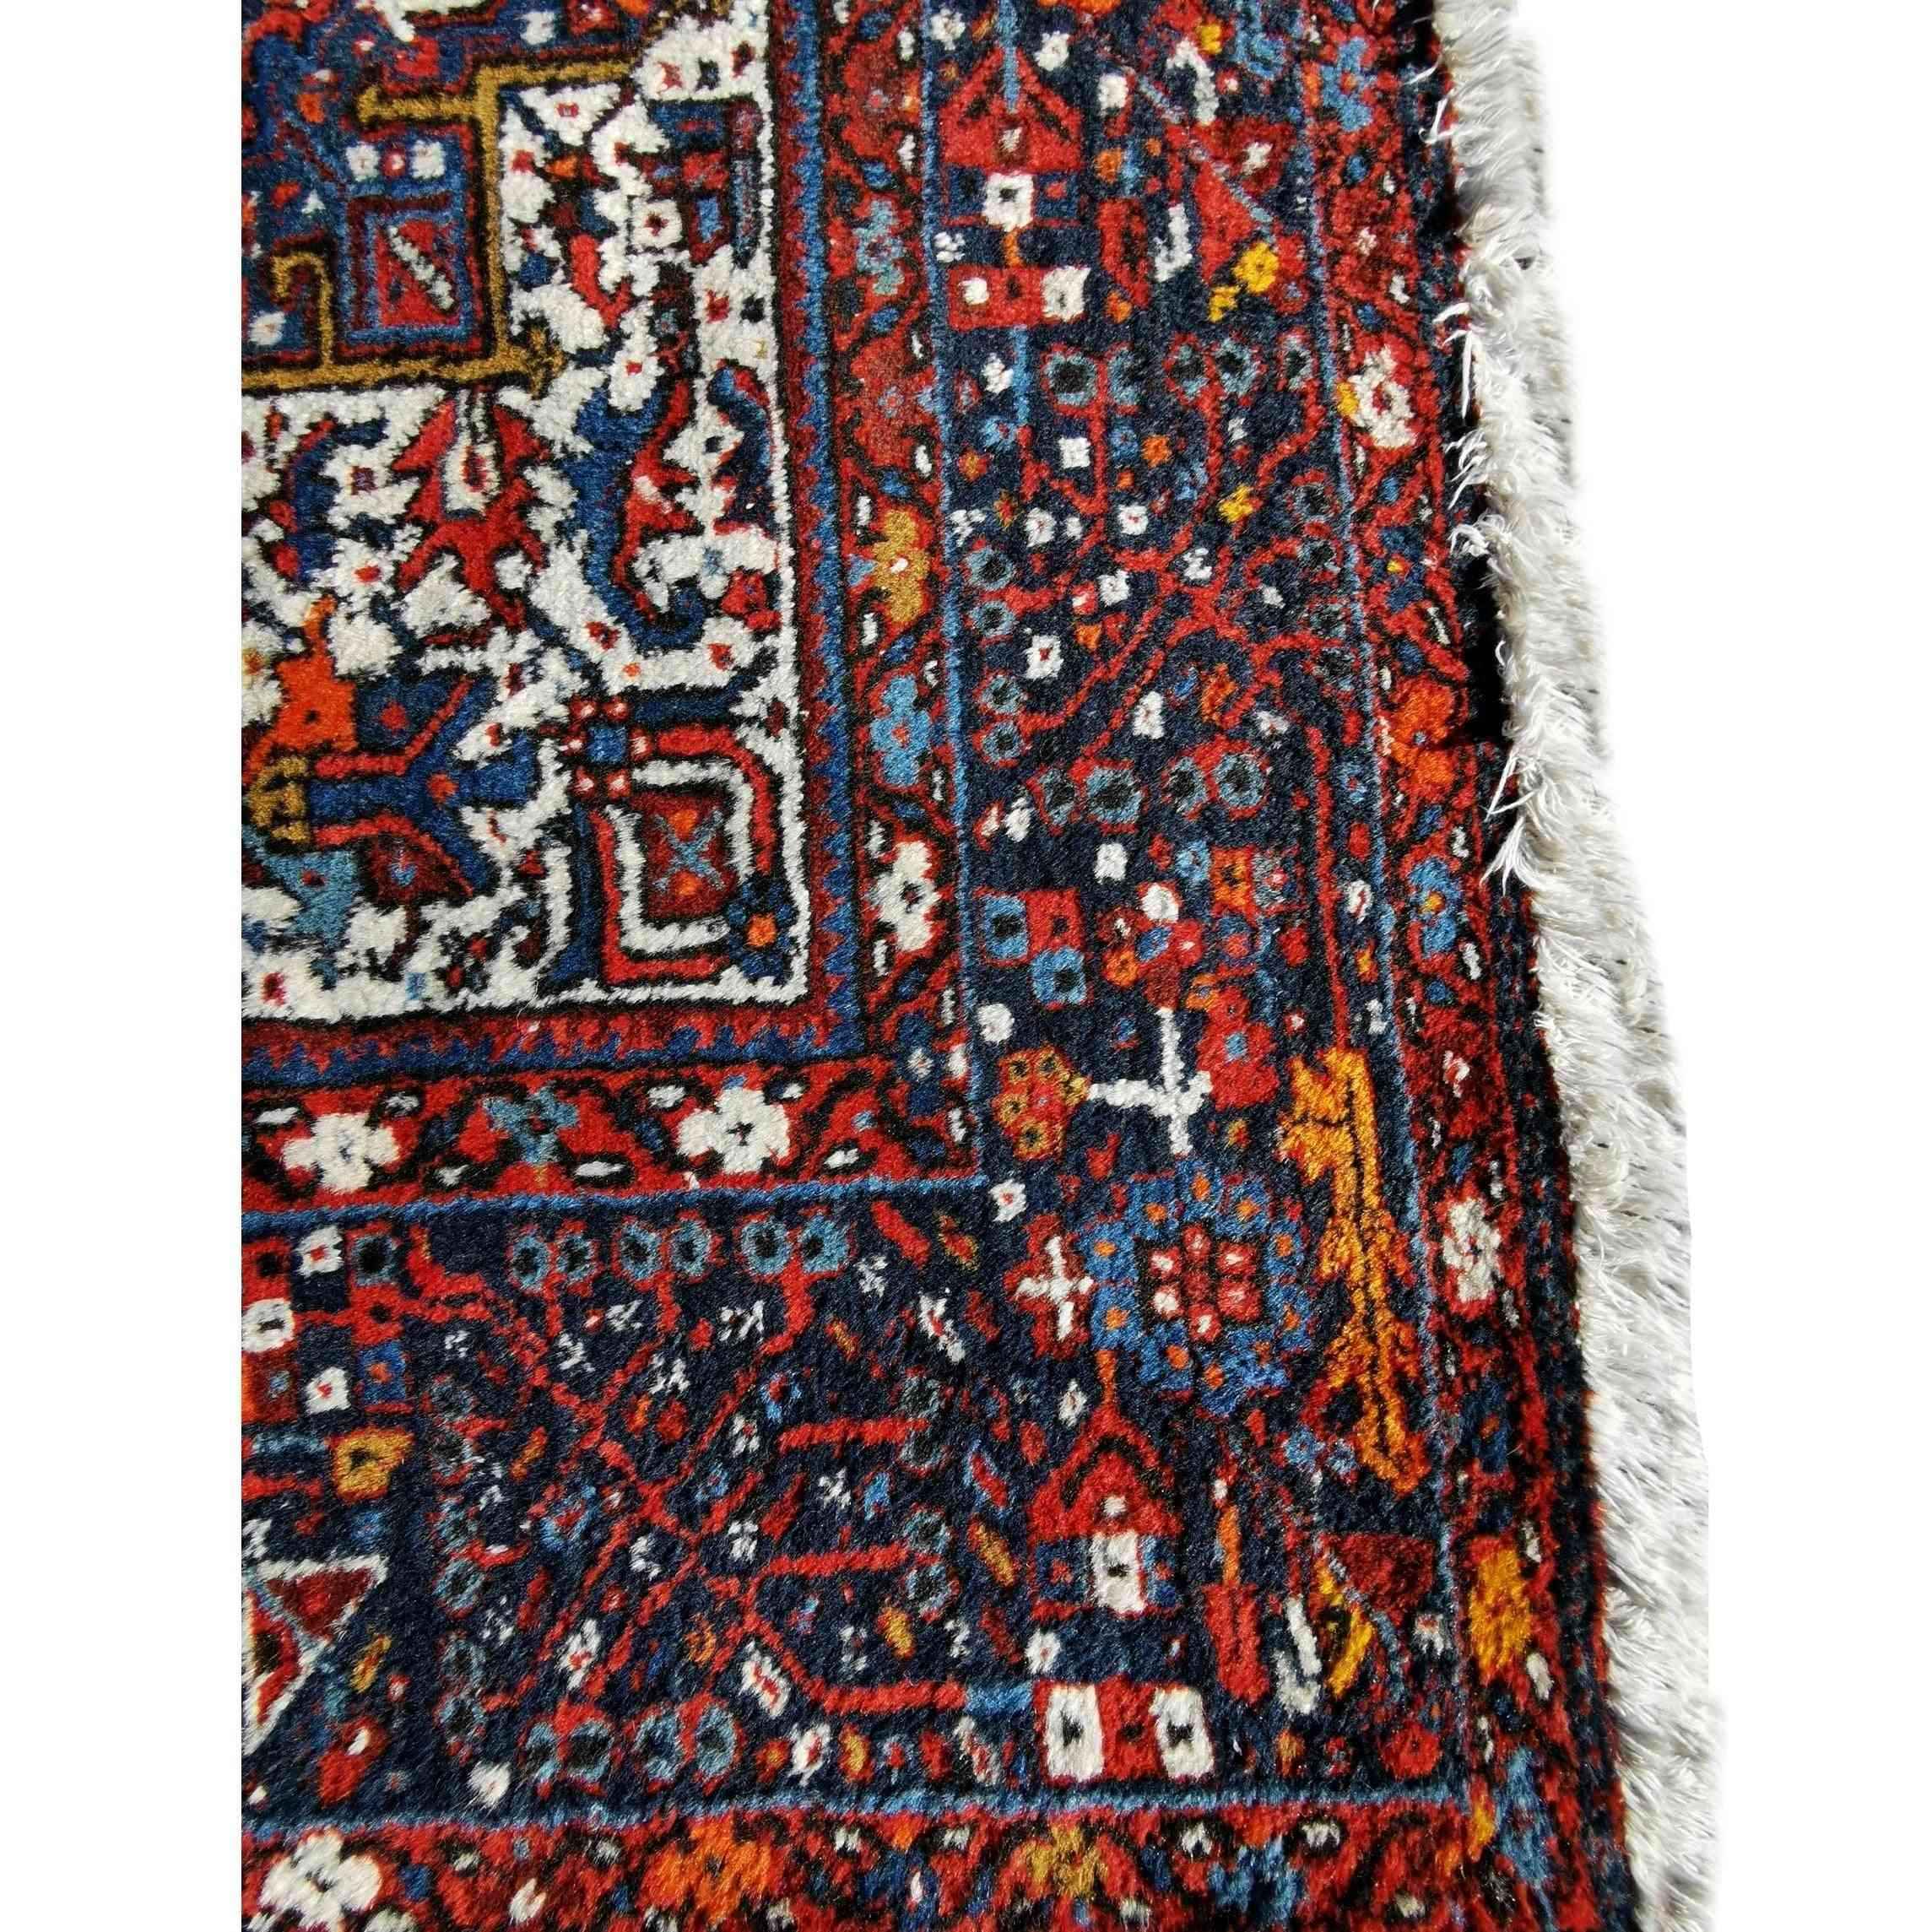 200 x 145 cm Hamedan Persian Traditional Red Rug - Rugmaster